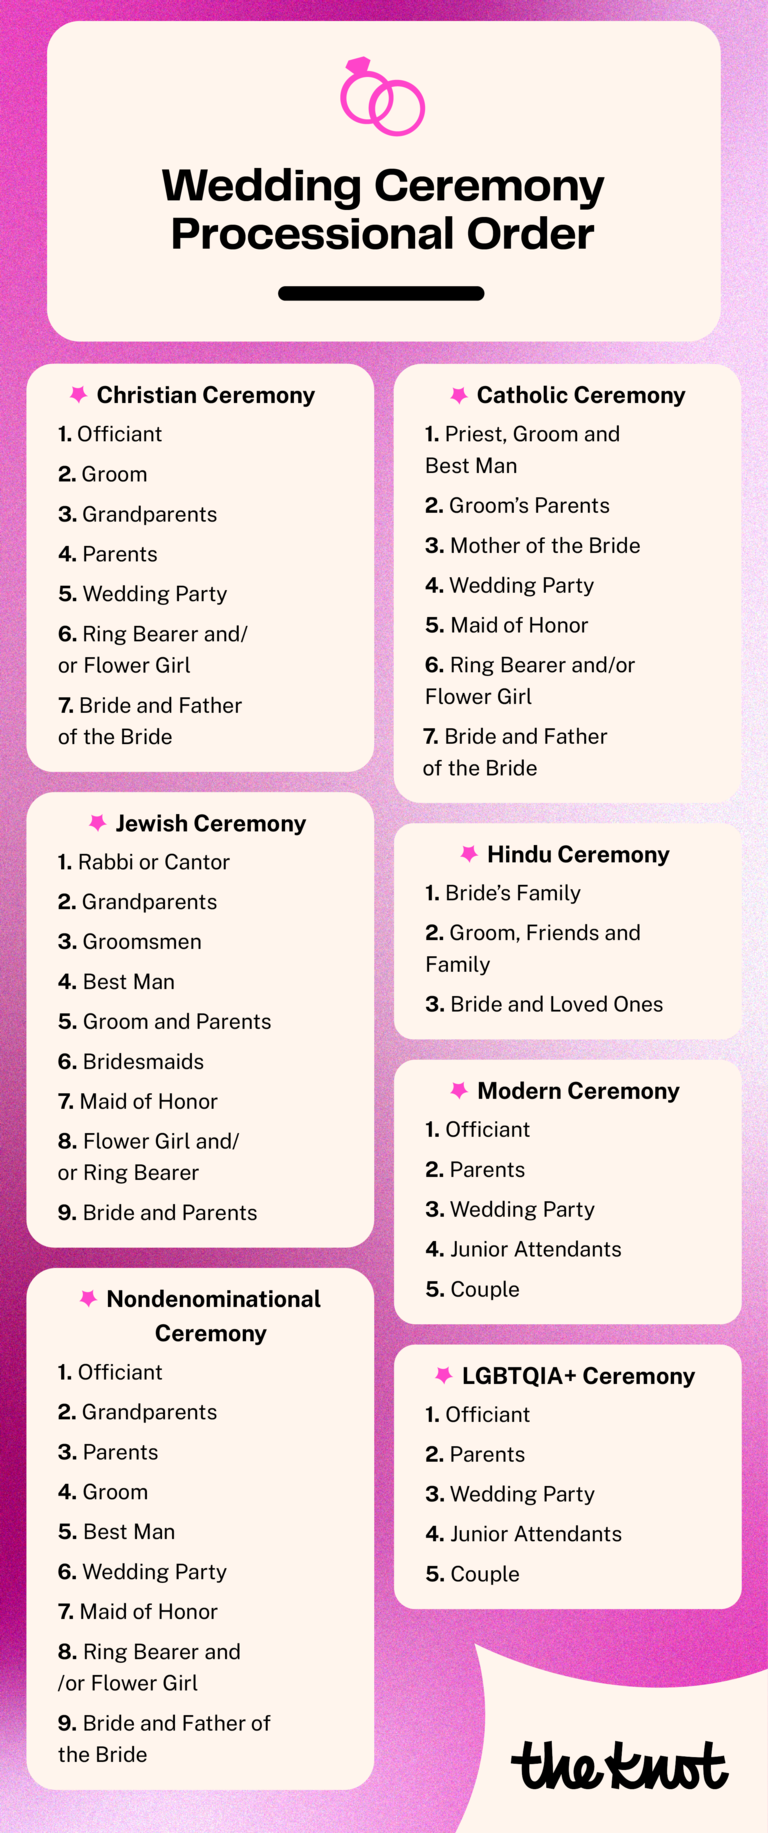 Wedding Ceremony Processional Order